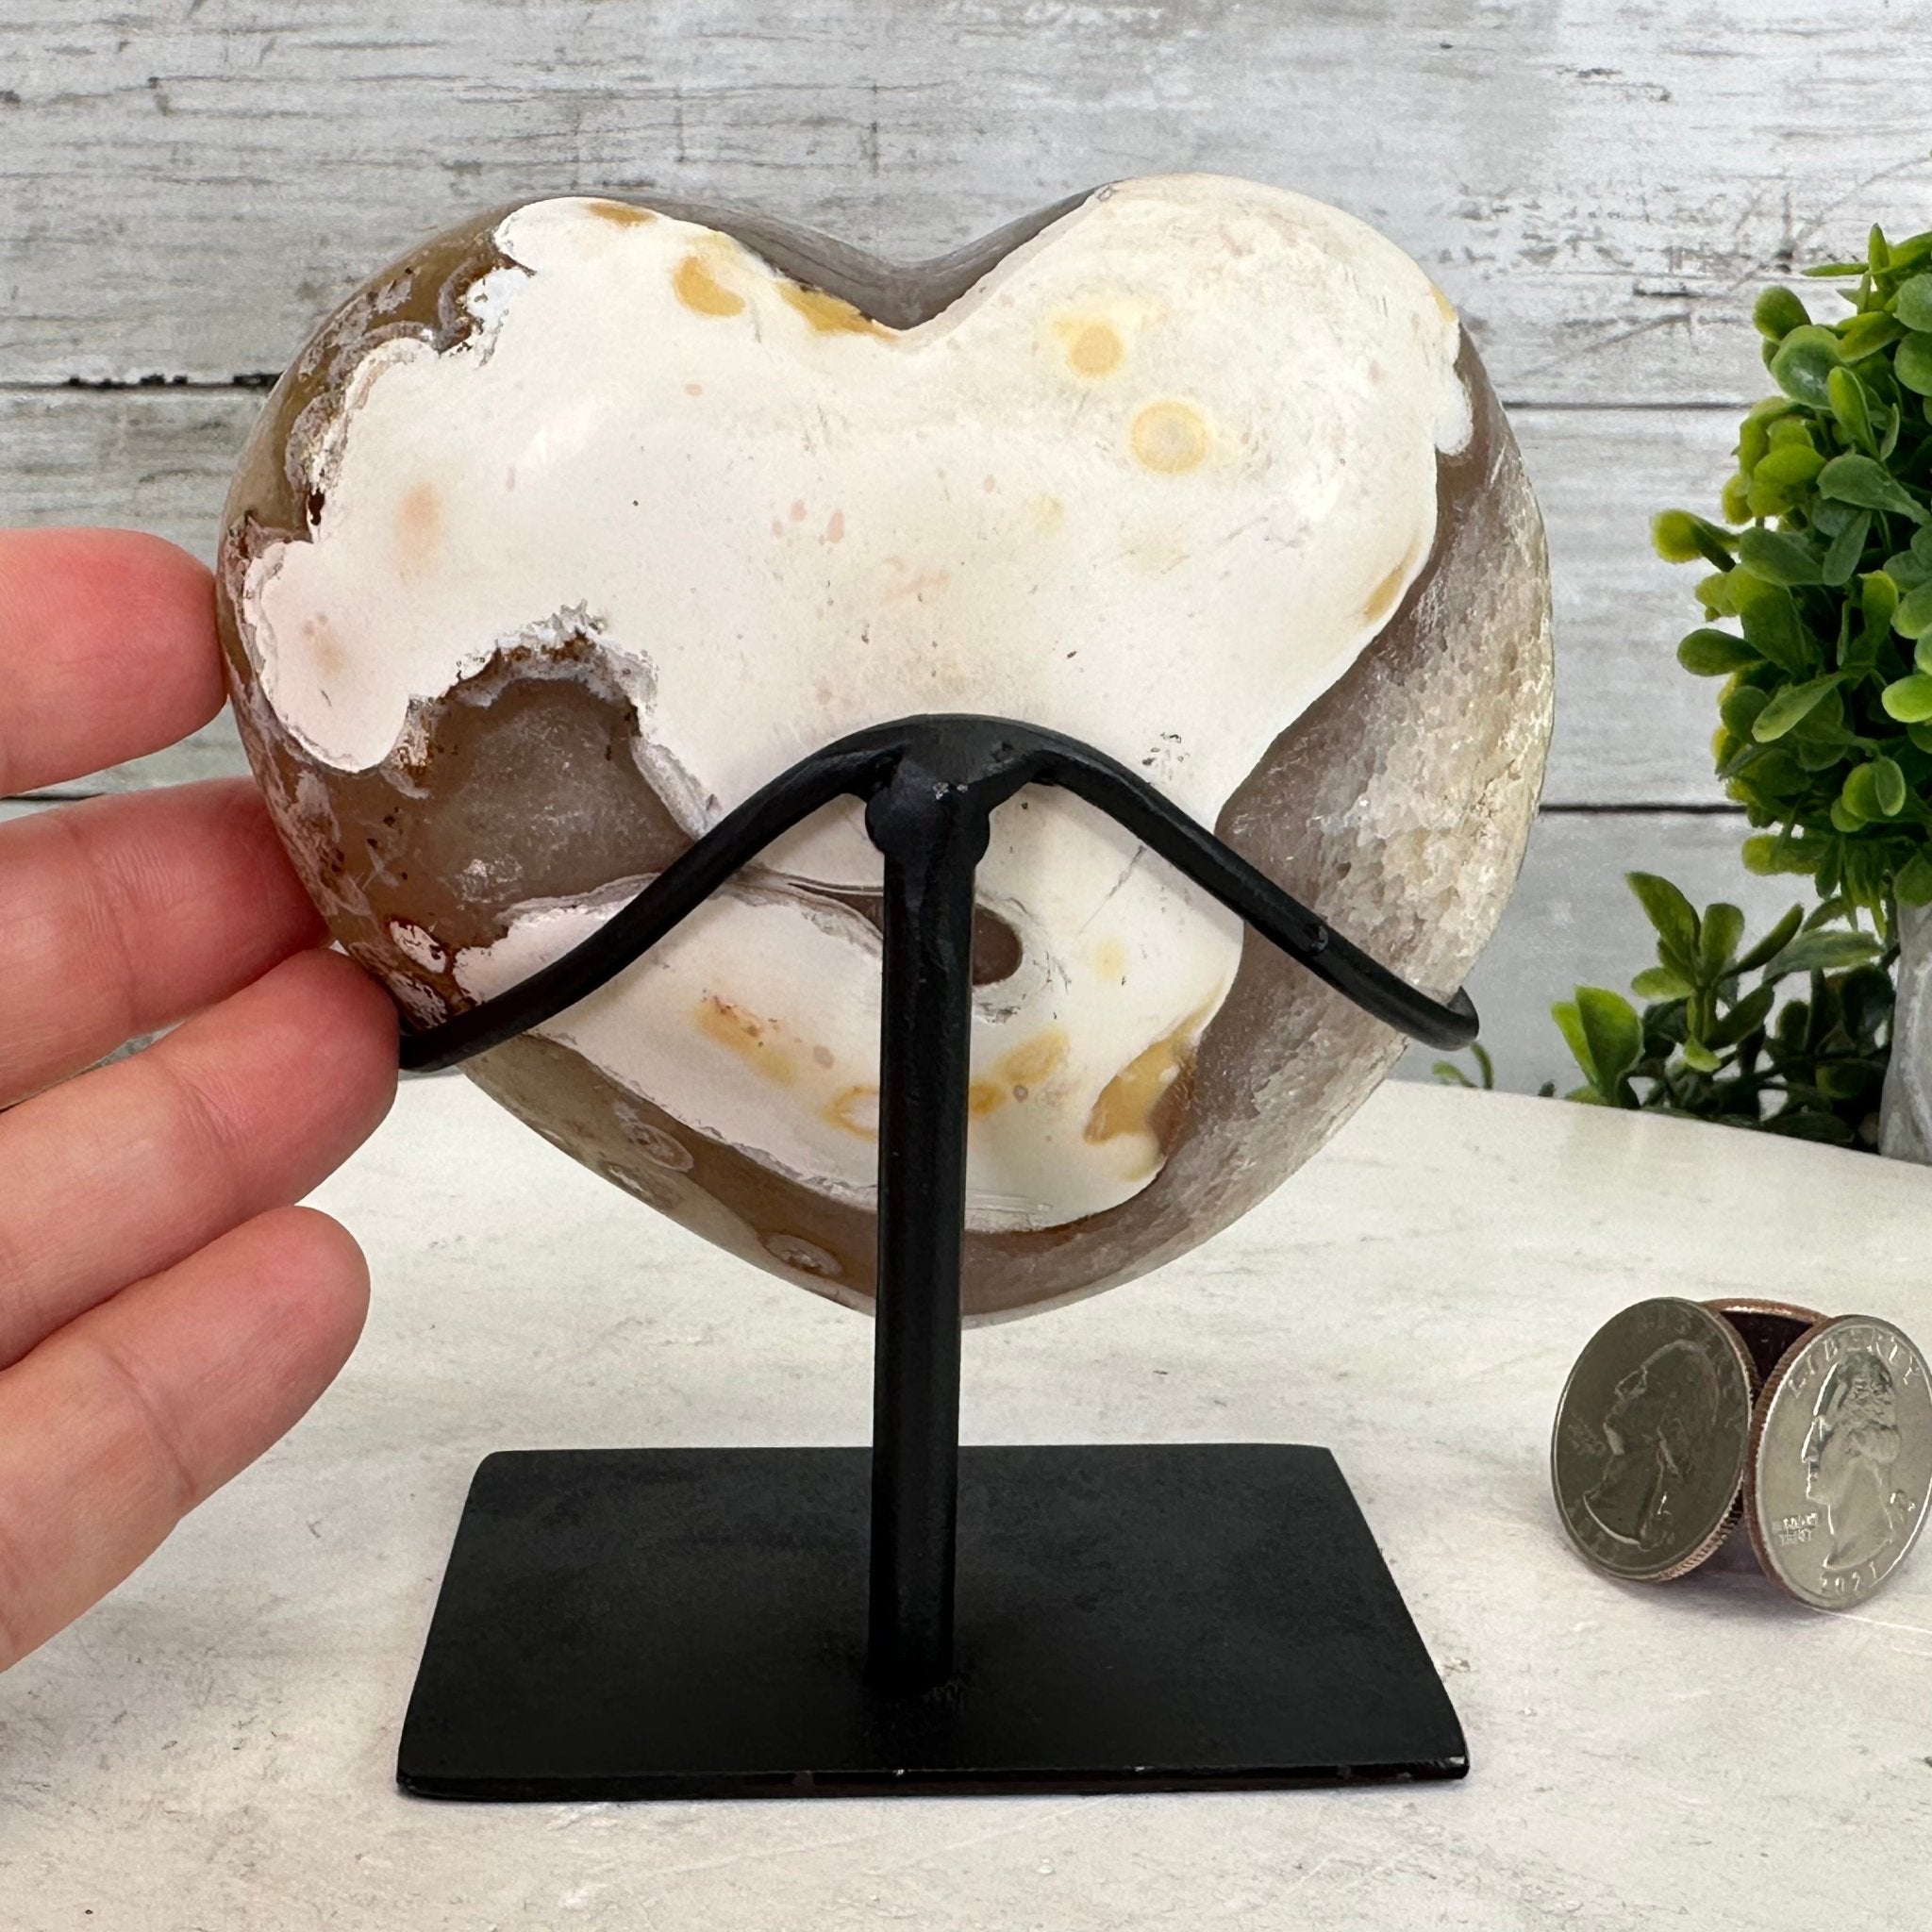 Polished Agate Heart Geode on a Metal Stand, 1.5 lbs & 4.4" Tall, Model #5468-0019 by Brazil Gems - Brazil GemsBrazil GemsPolished Agate Heart Geode on a Metal Stand, 1.5 lbs & 4.4" Tall, Model #5468-0019 by Brazil GemsHearts5468-0019